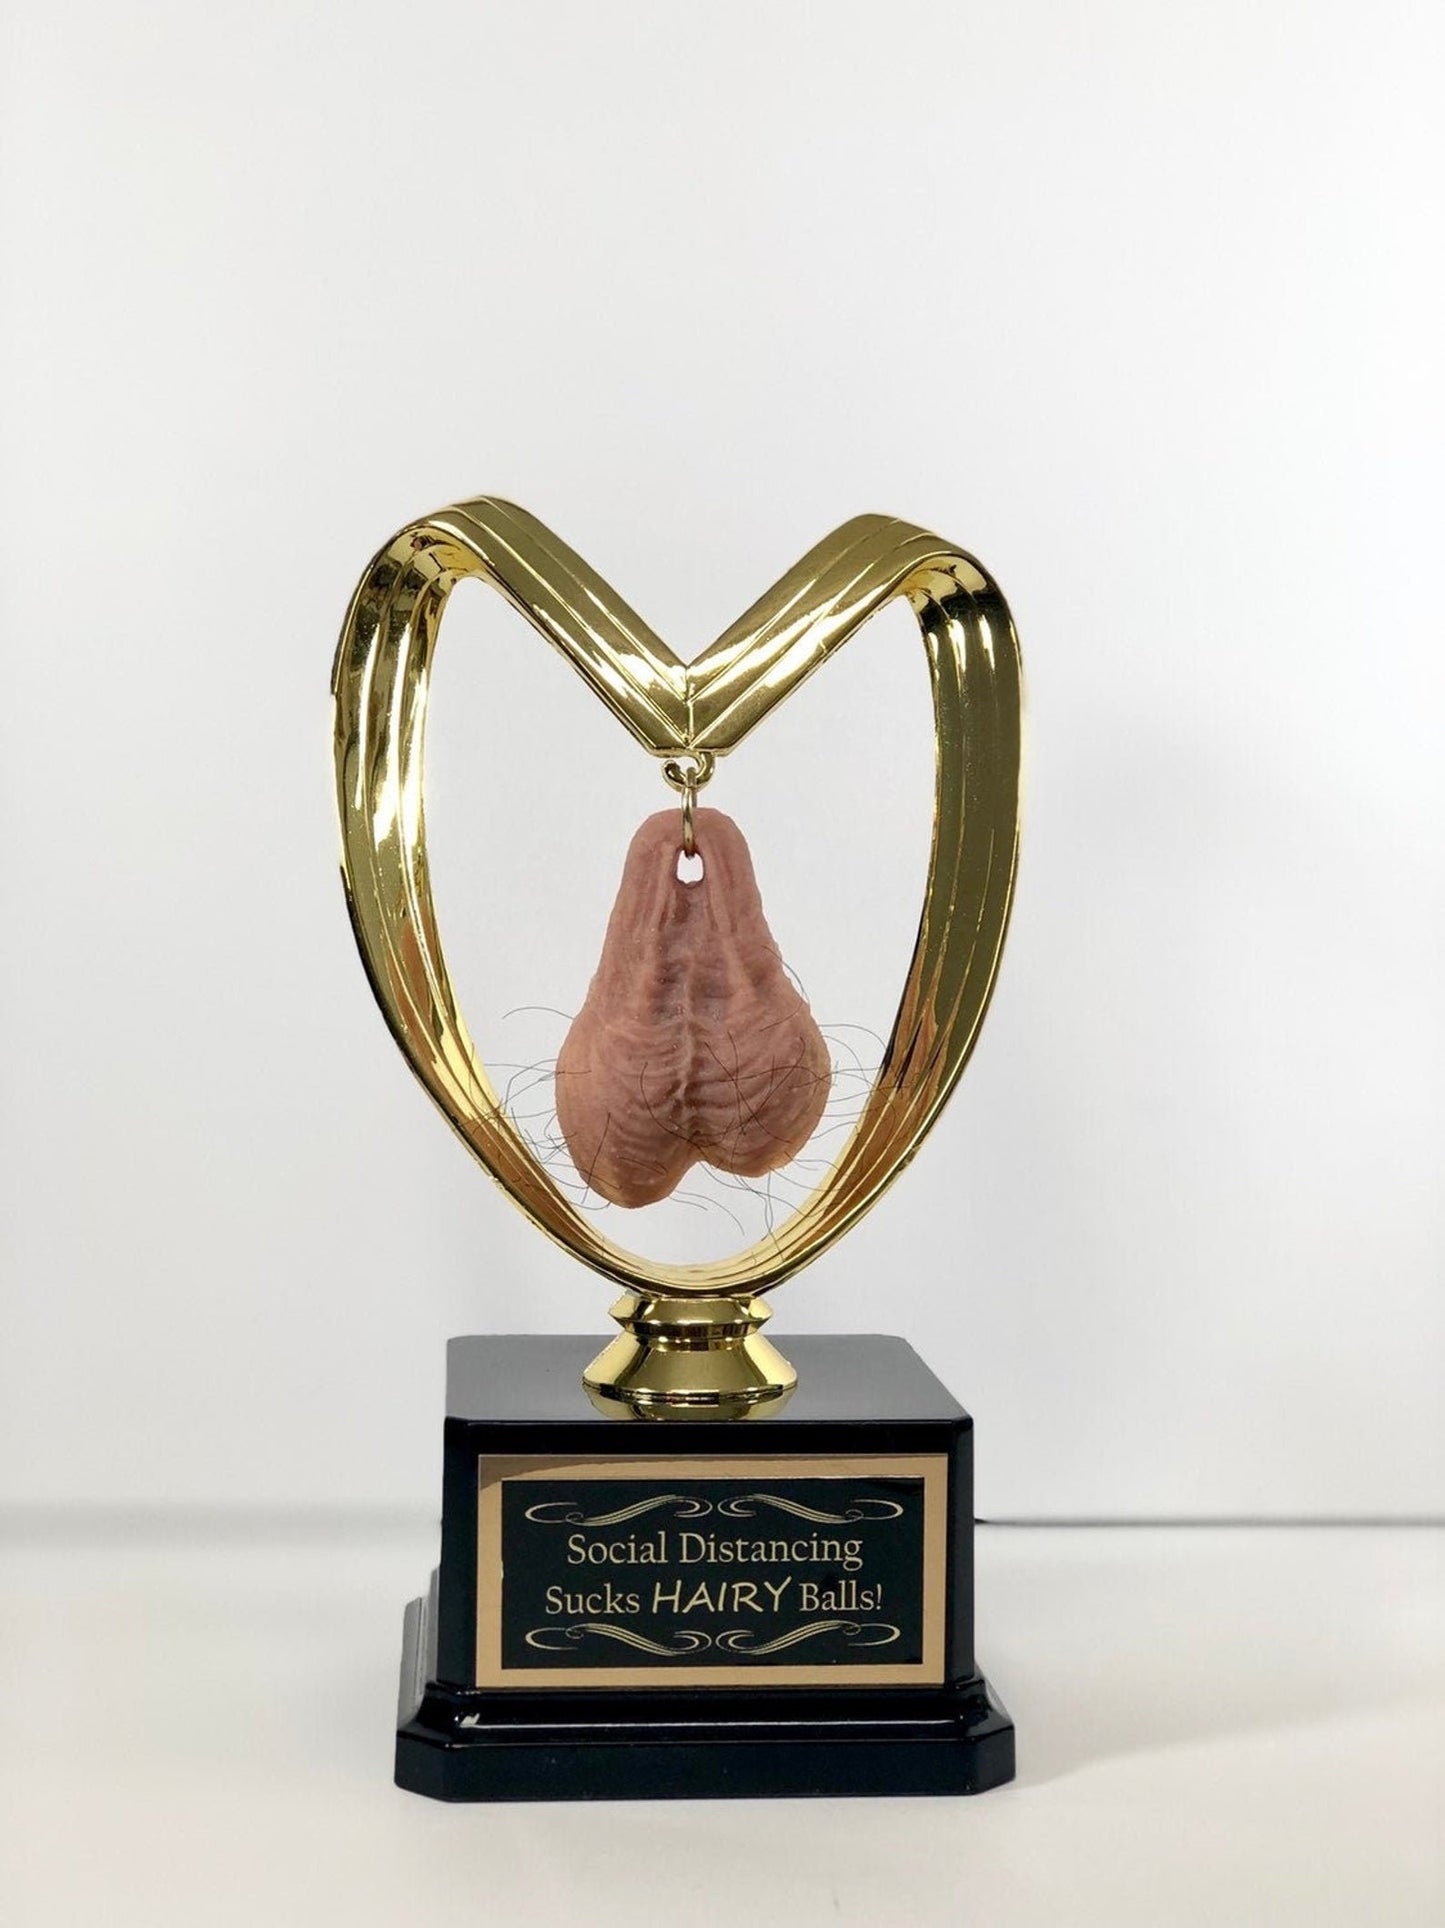 FFL Trophy Fantasy Football Sacko Award Awww Nuts! Last Place Loser Sacko You've Got Balls Funny Trophy Adult Humor Gag Gift Testicle Penis